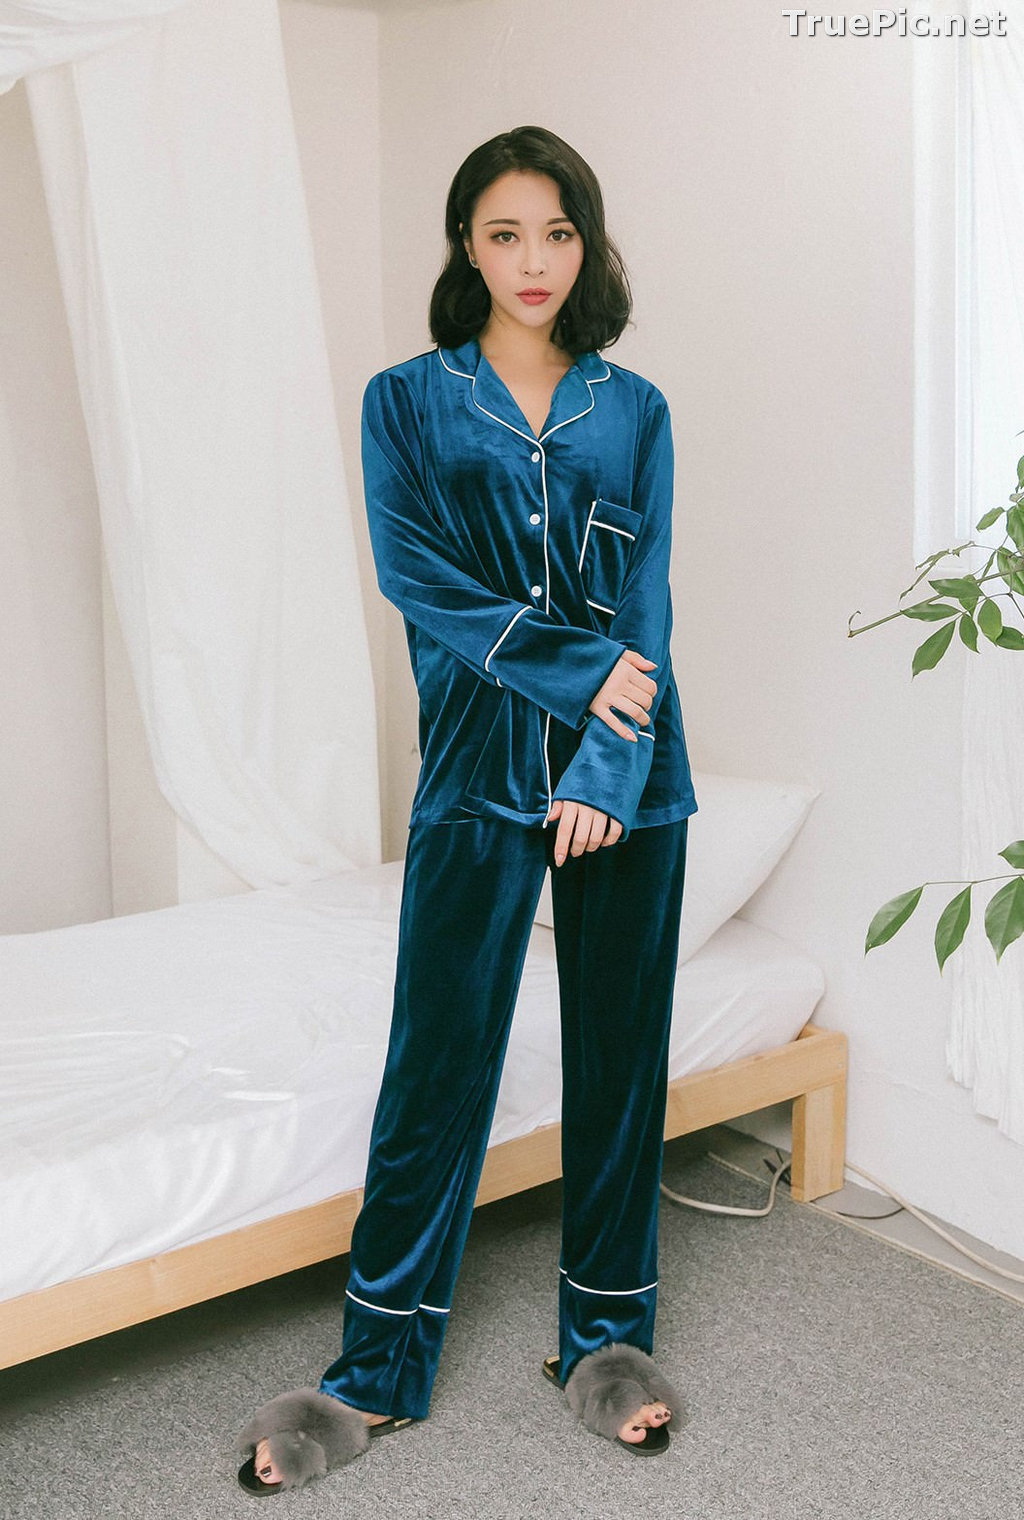 Image Ryu Hyeonju - Korean Fashion Model - Pijama and Lingerie Set - TruePic.net - Picture-40